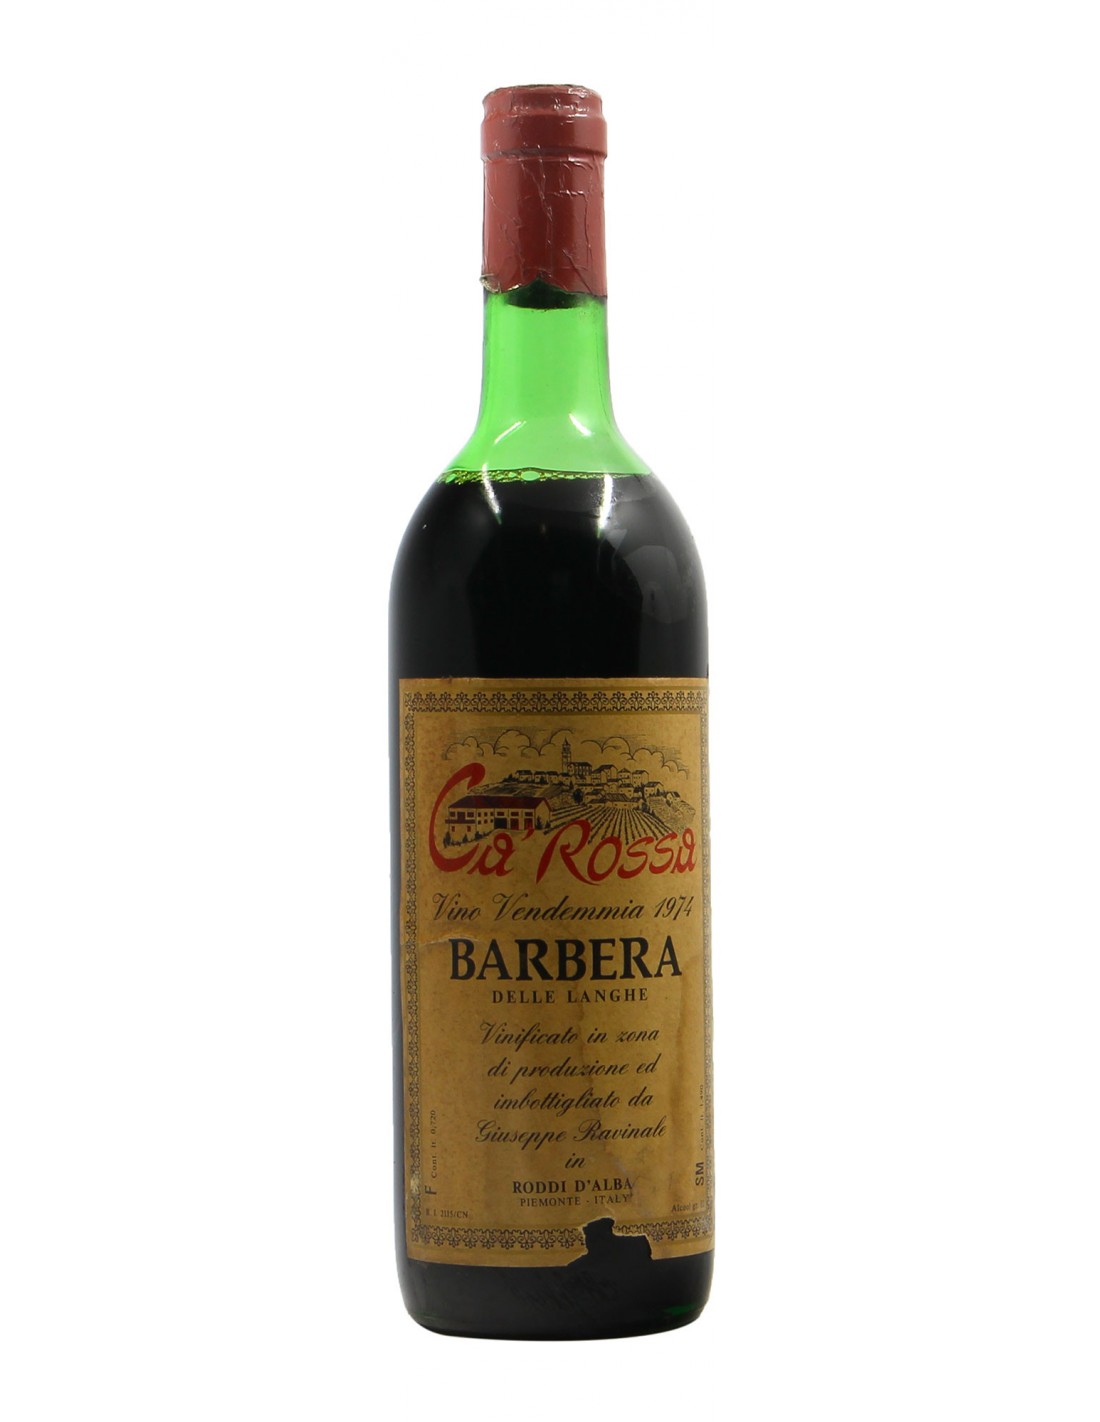 BARBERA 1974 CA' ROSSA Grandi Bottiglie